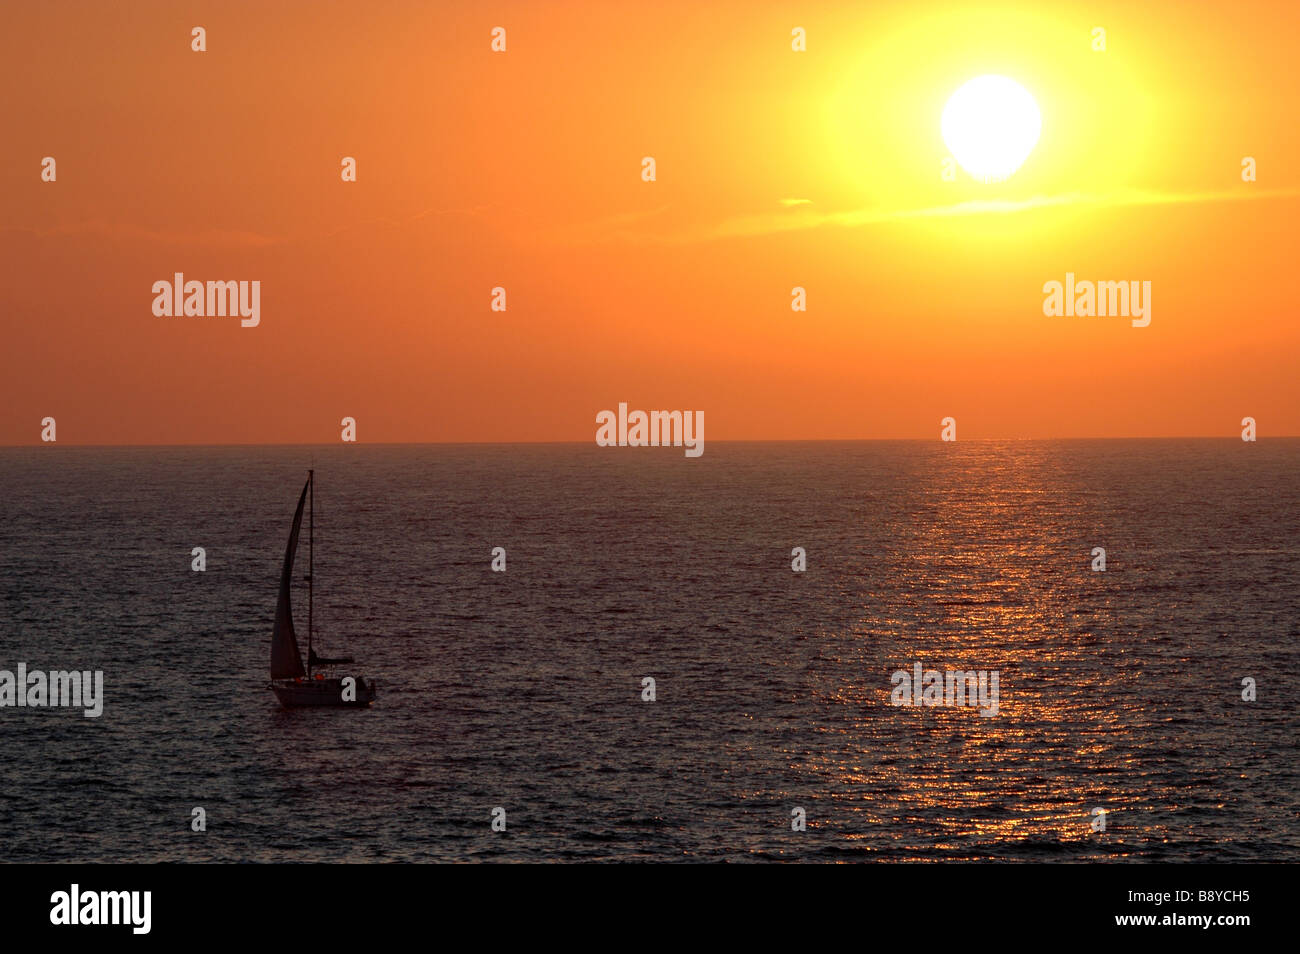 Sailboat and setting sun over ocean Island Menorca Balears Spain Stock Photo